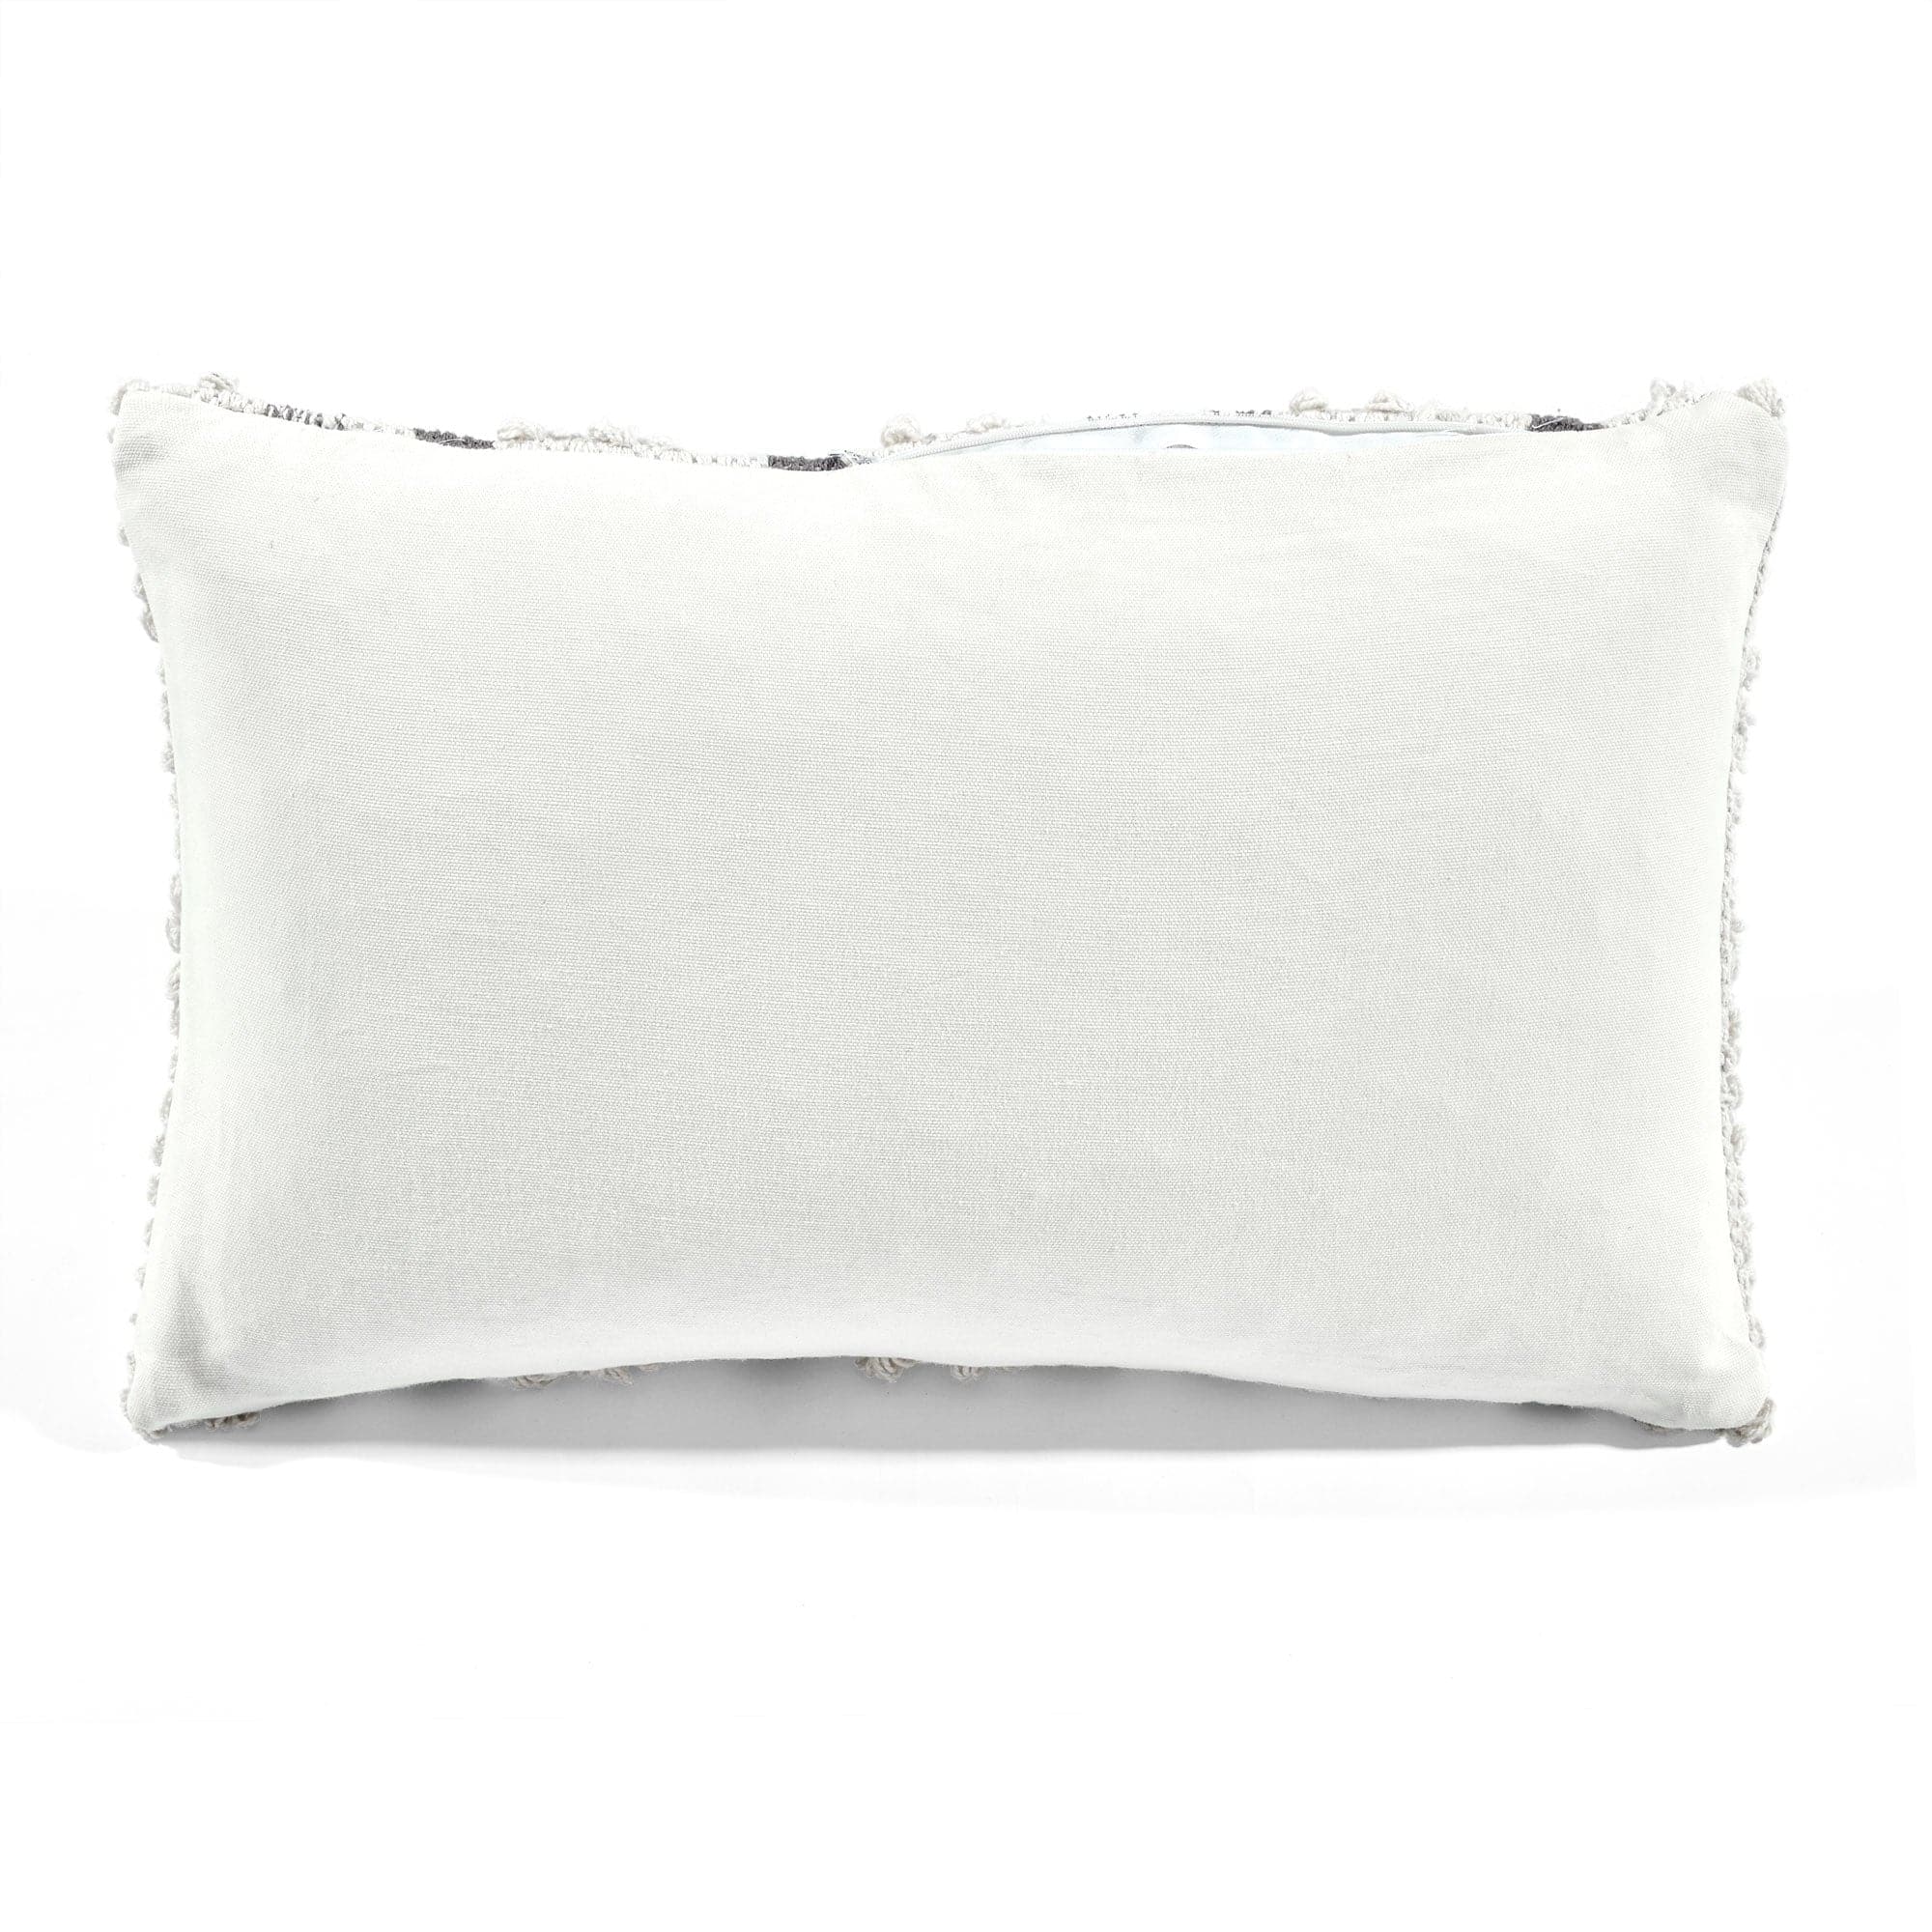 Gray Throw Pillow Checkered Pillow Soft Throw Boho Pillow Covers